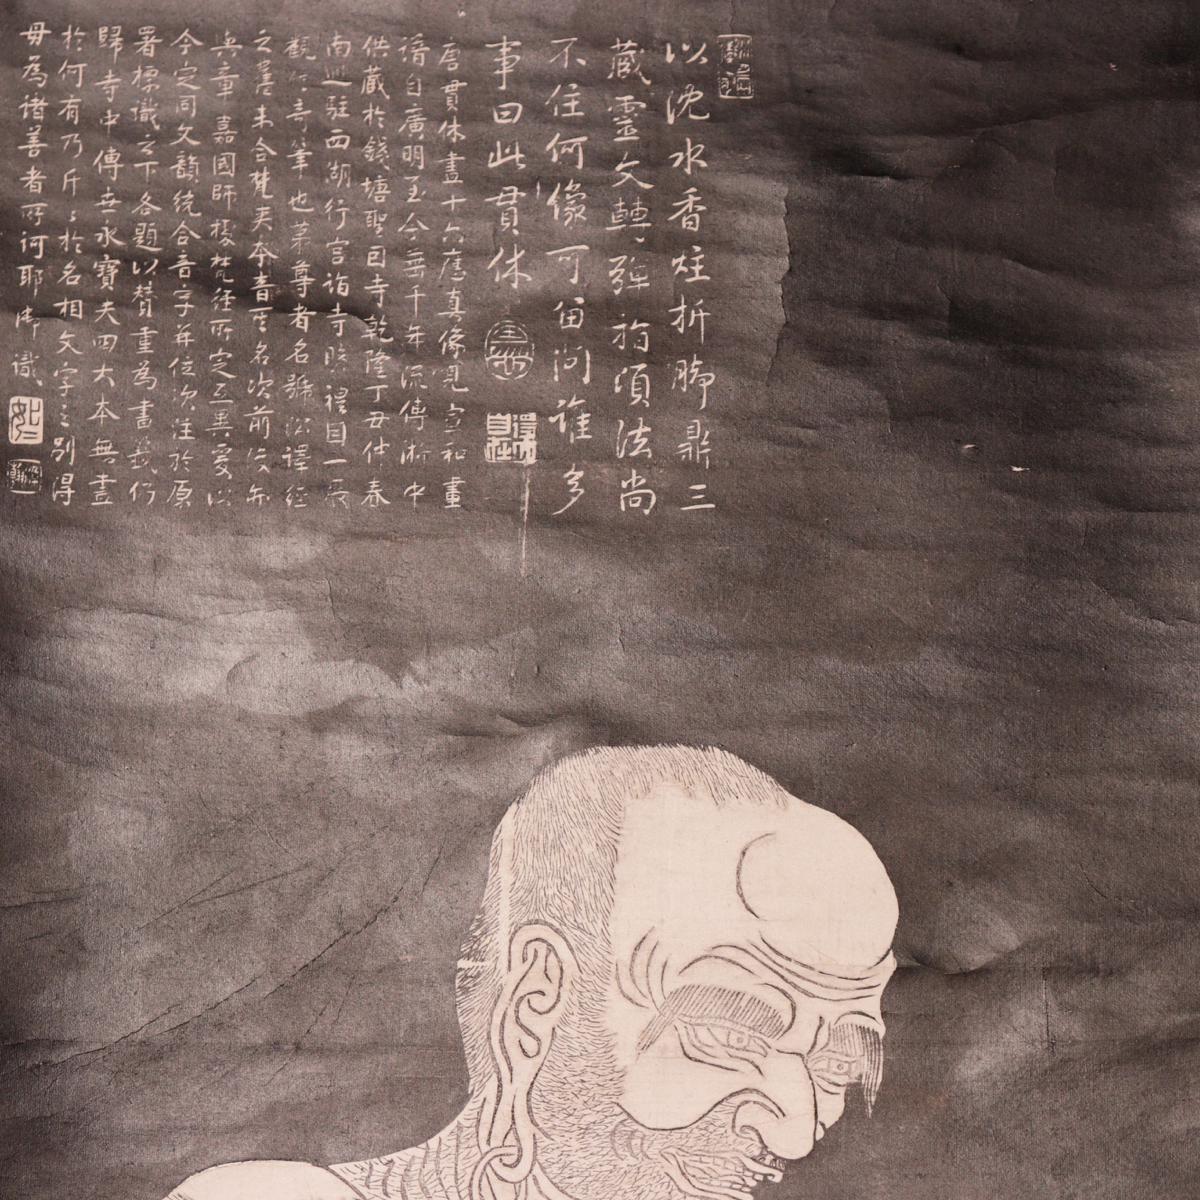 Pressed Antique Chinese Ink Rubbing Depicting Panthaka Arhat, Scroll Mounting